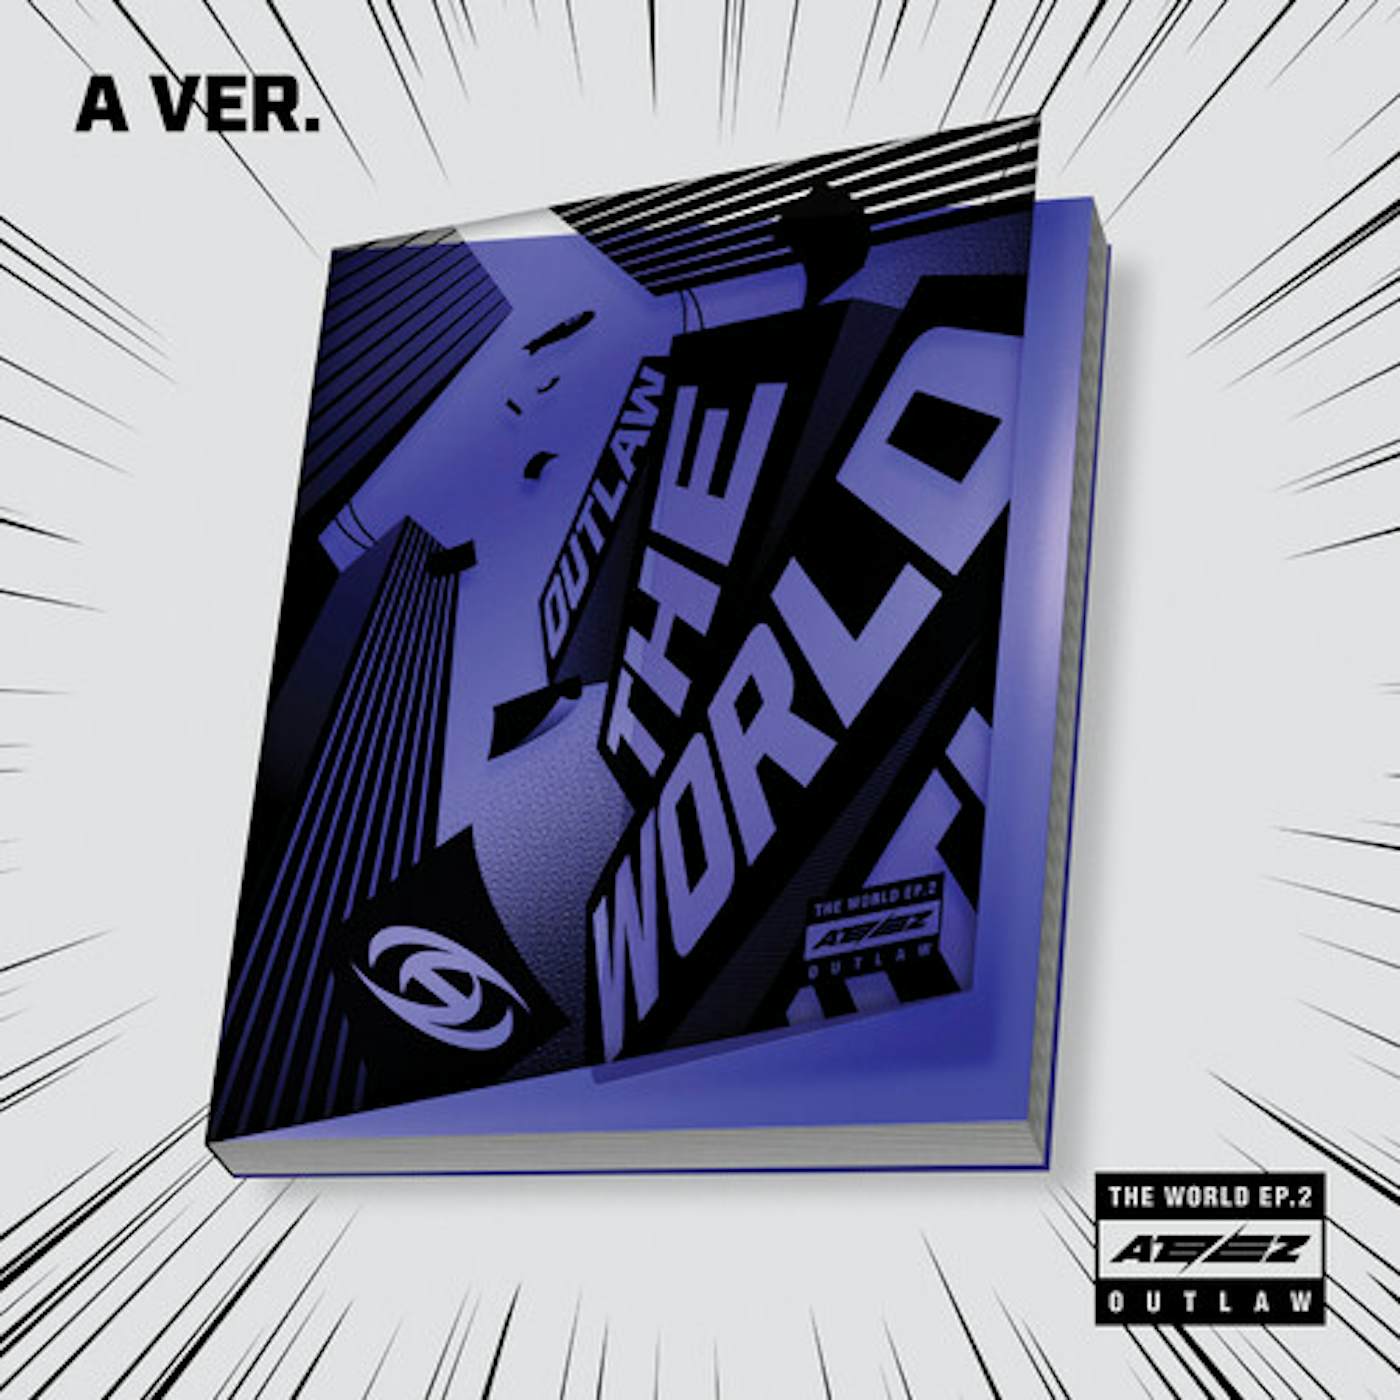 ATEEZ ZERO:FEVER EPILOGUE Album CD+POSTER+Photo Book+Sticker+12